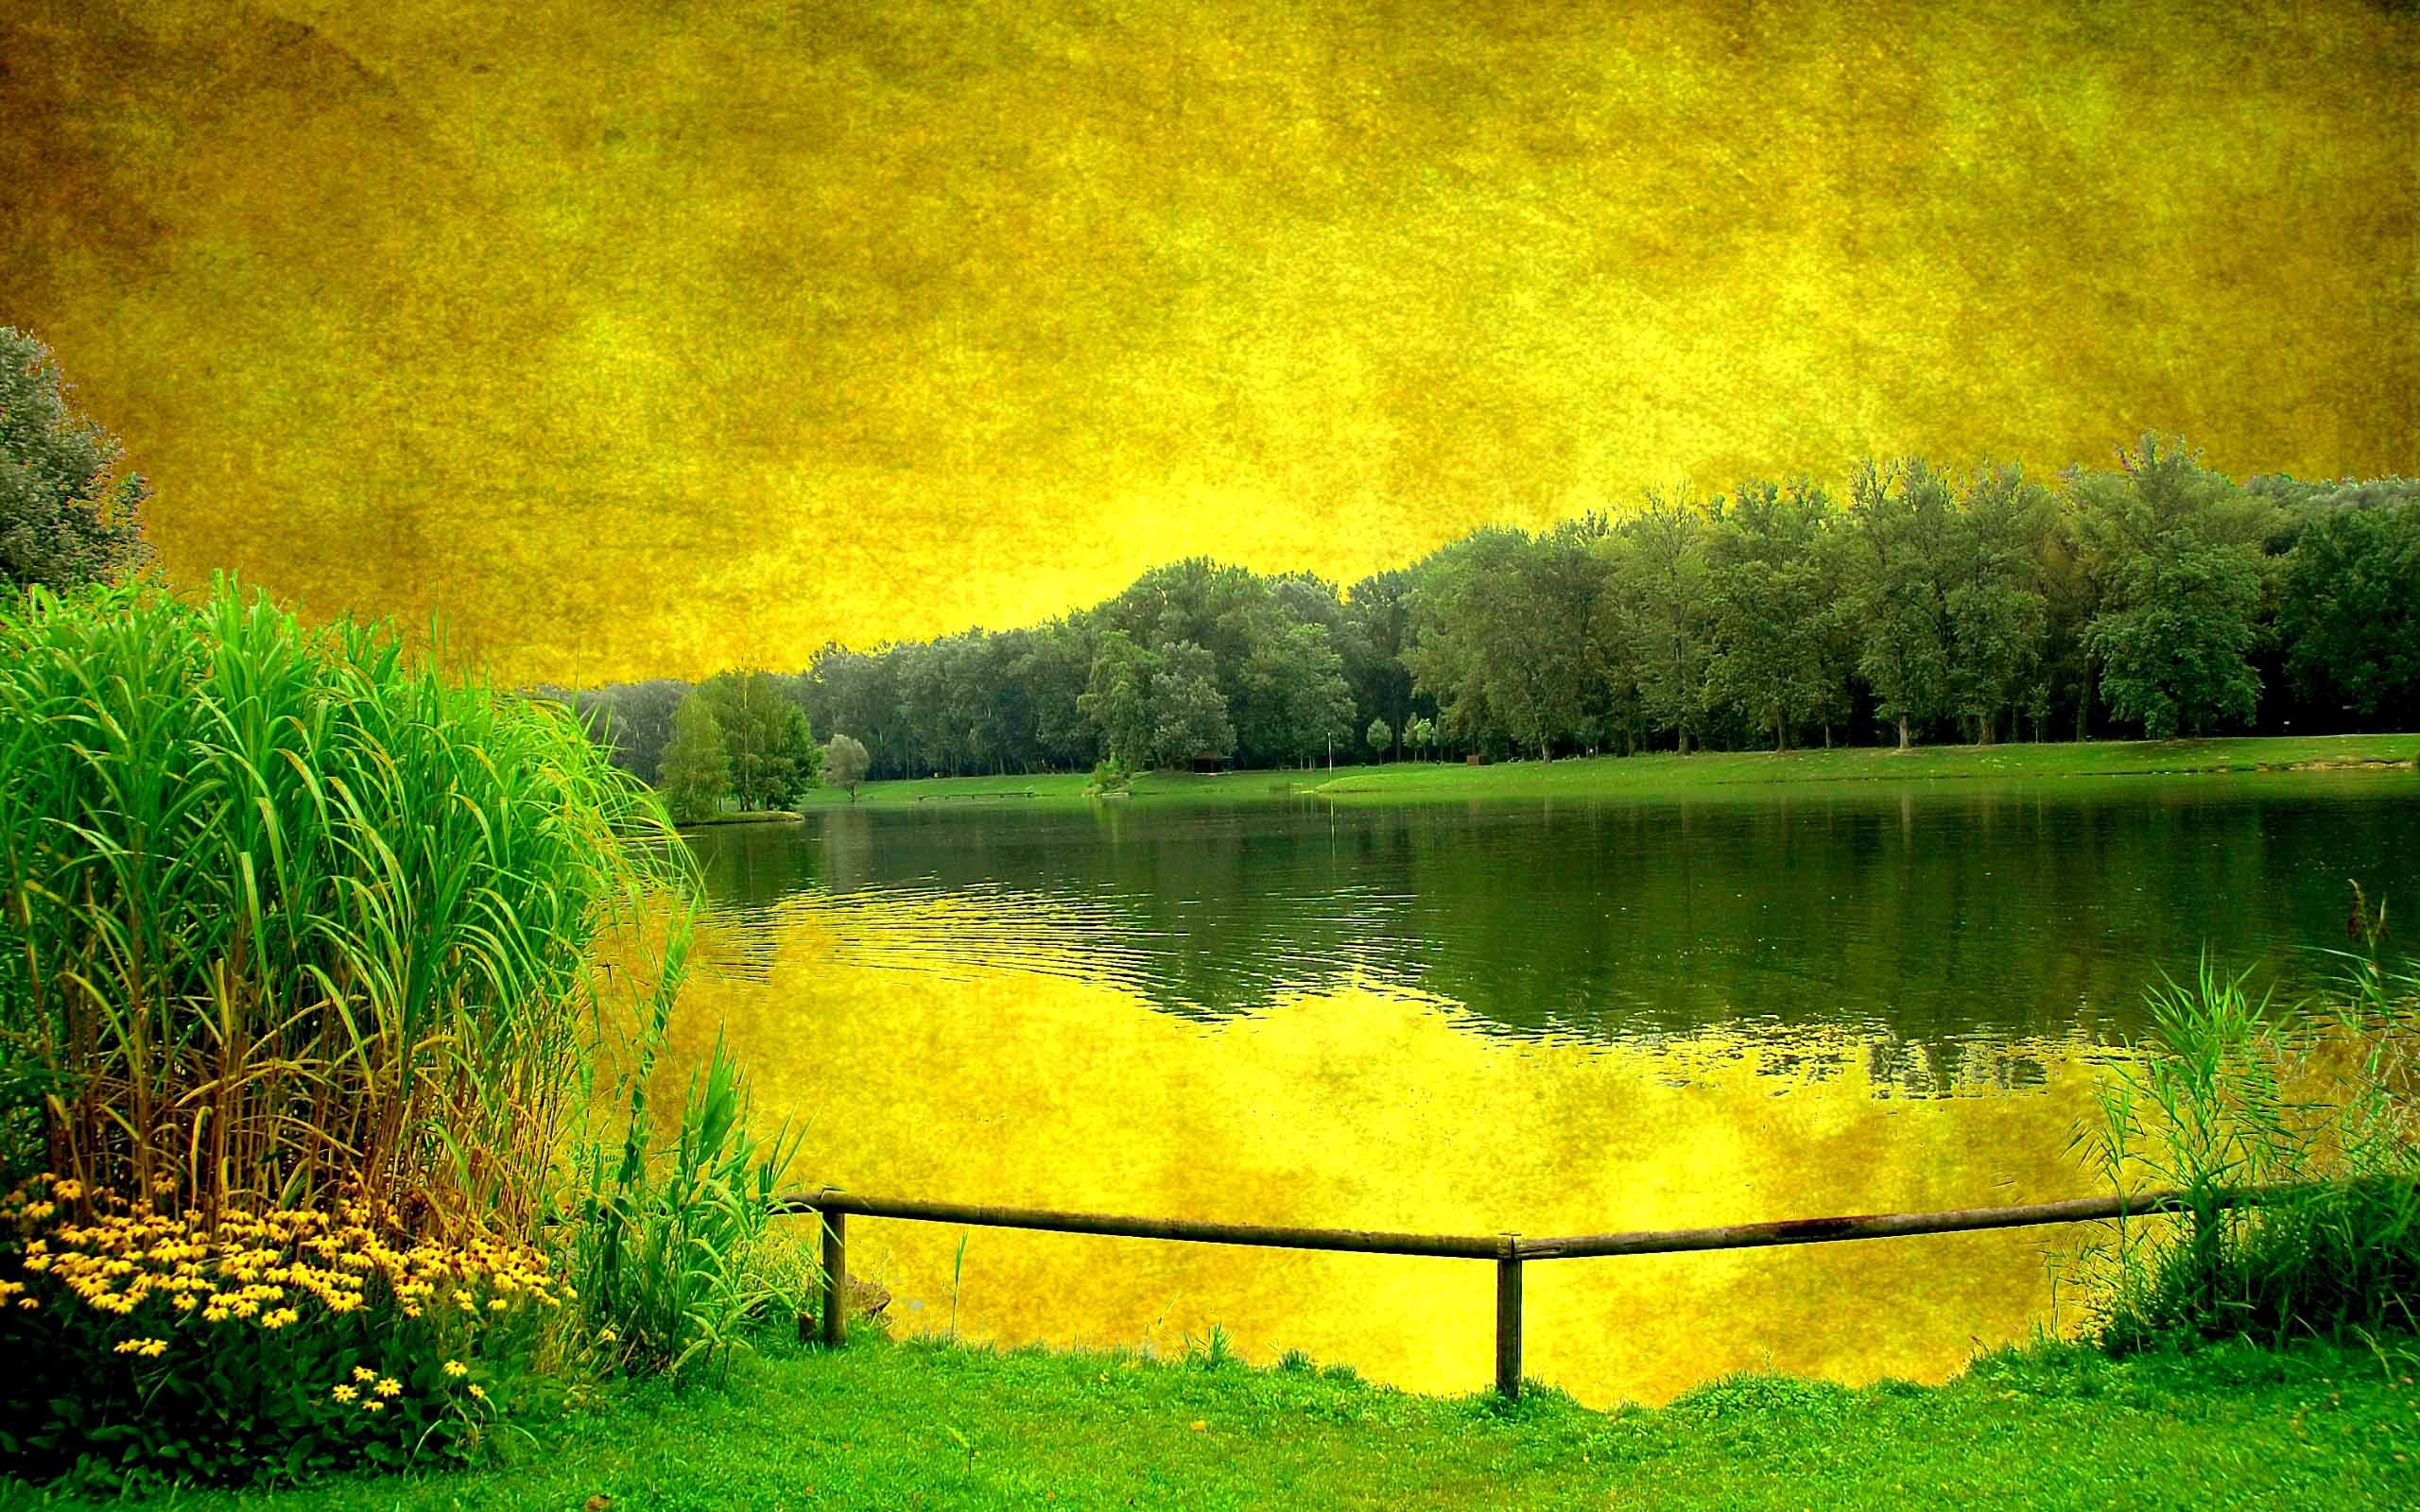 General 2560x1600 landscape plants outdoors water photo manipulation photoshopped digital art